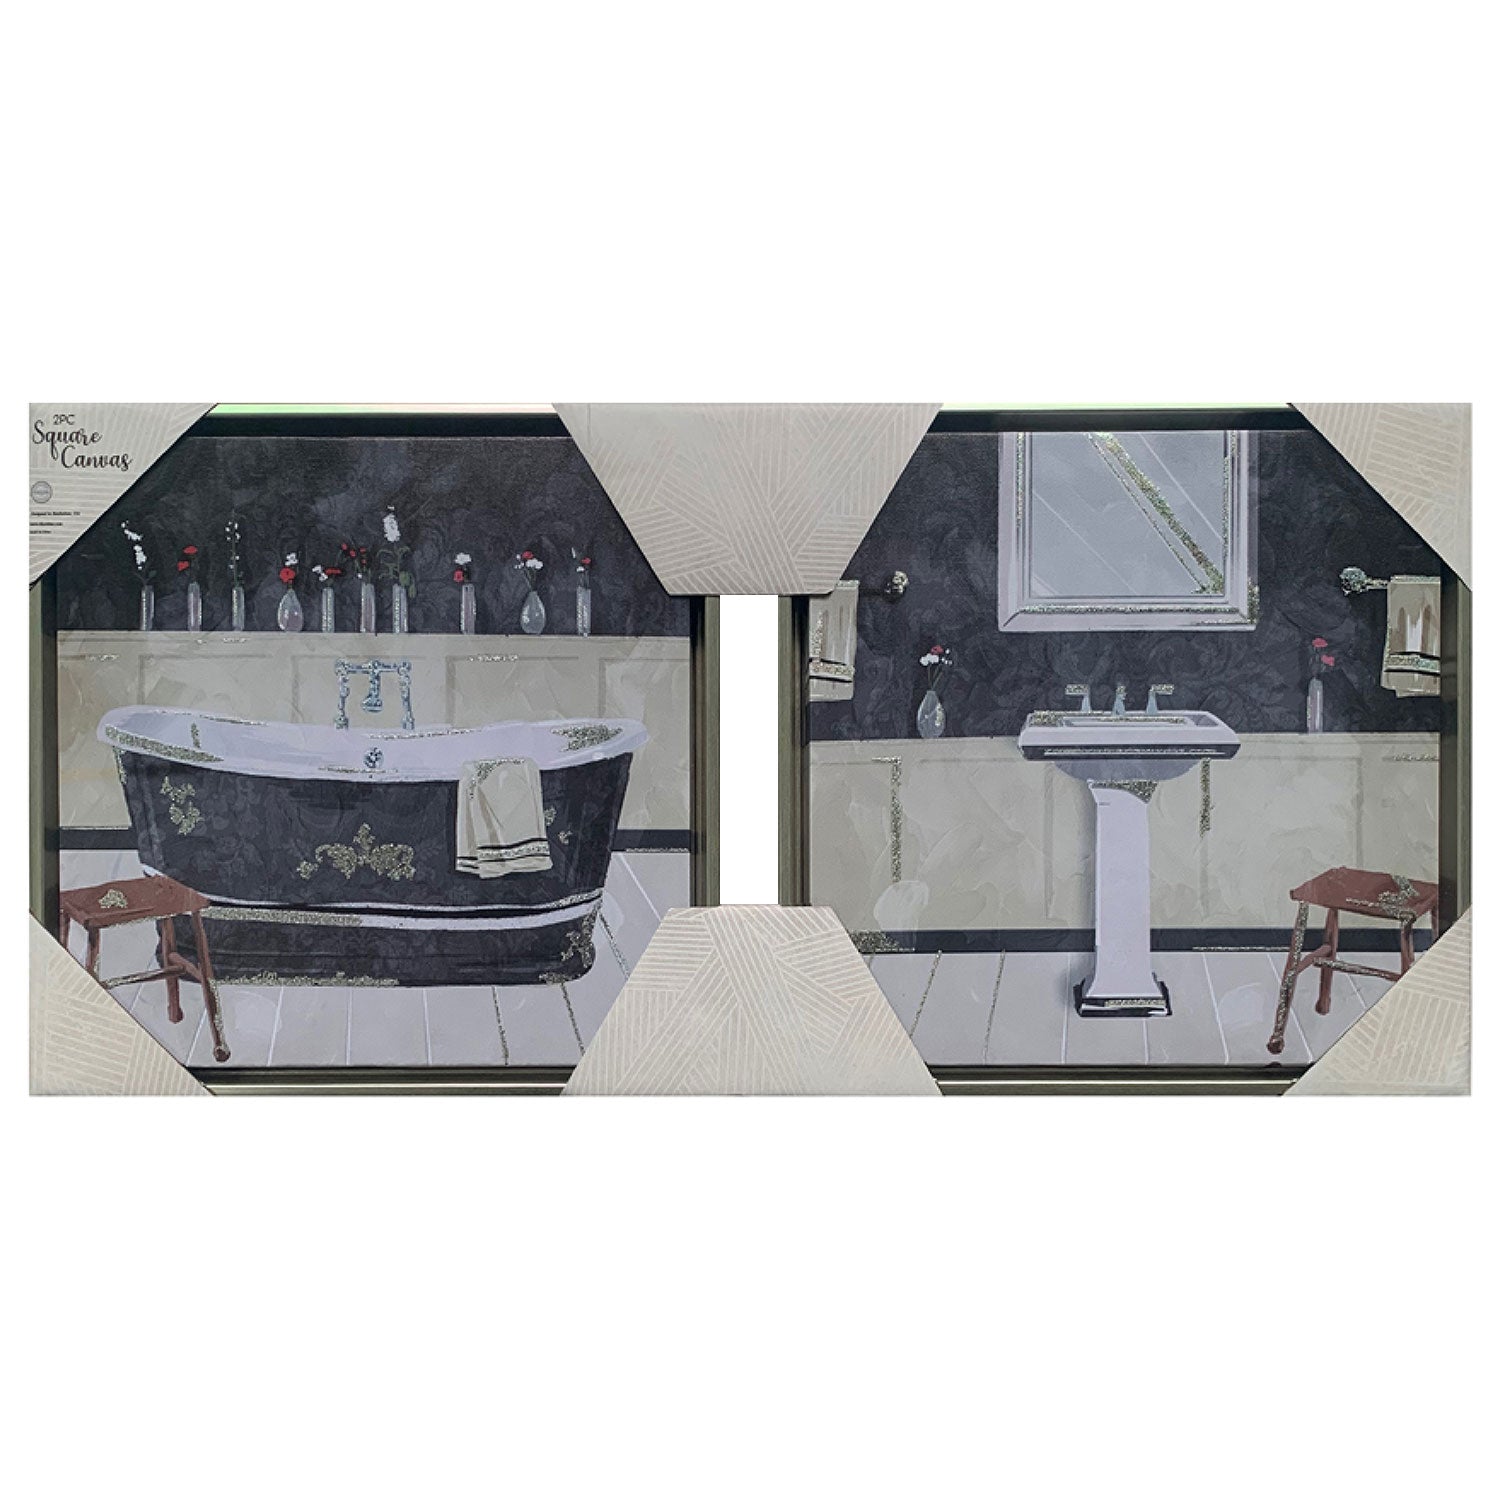 Premius 2 Piece Bathroom Scene Framed Canvas Wall Art Set, Black, 12x12 Inches